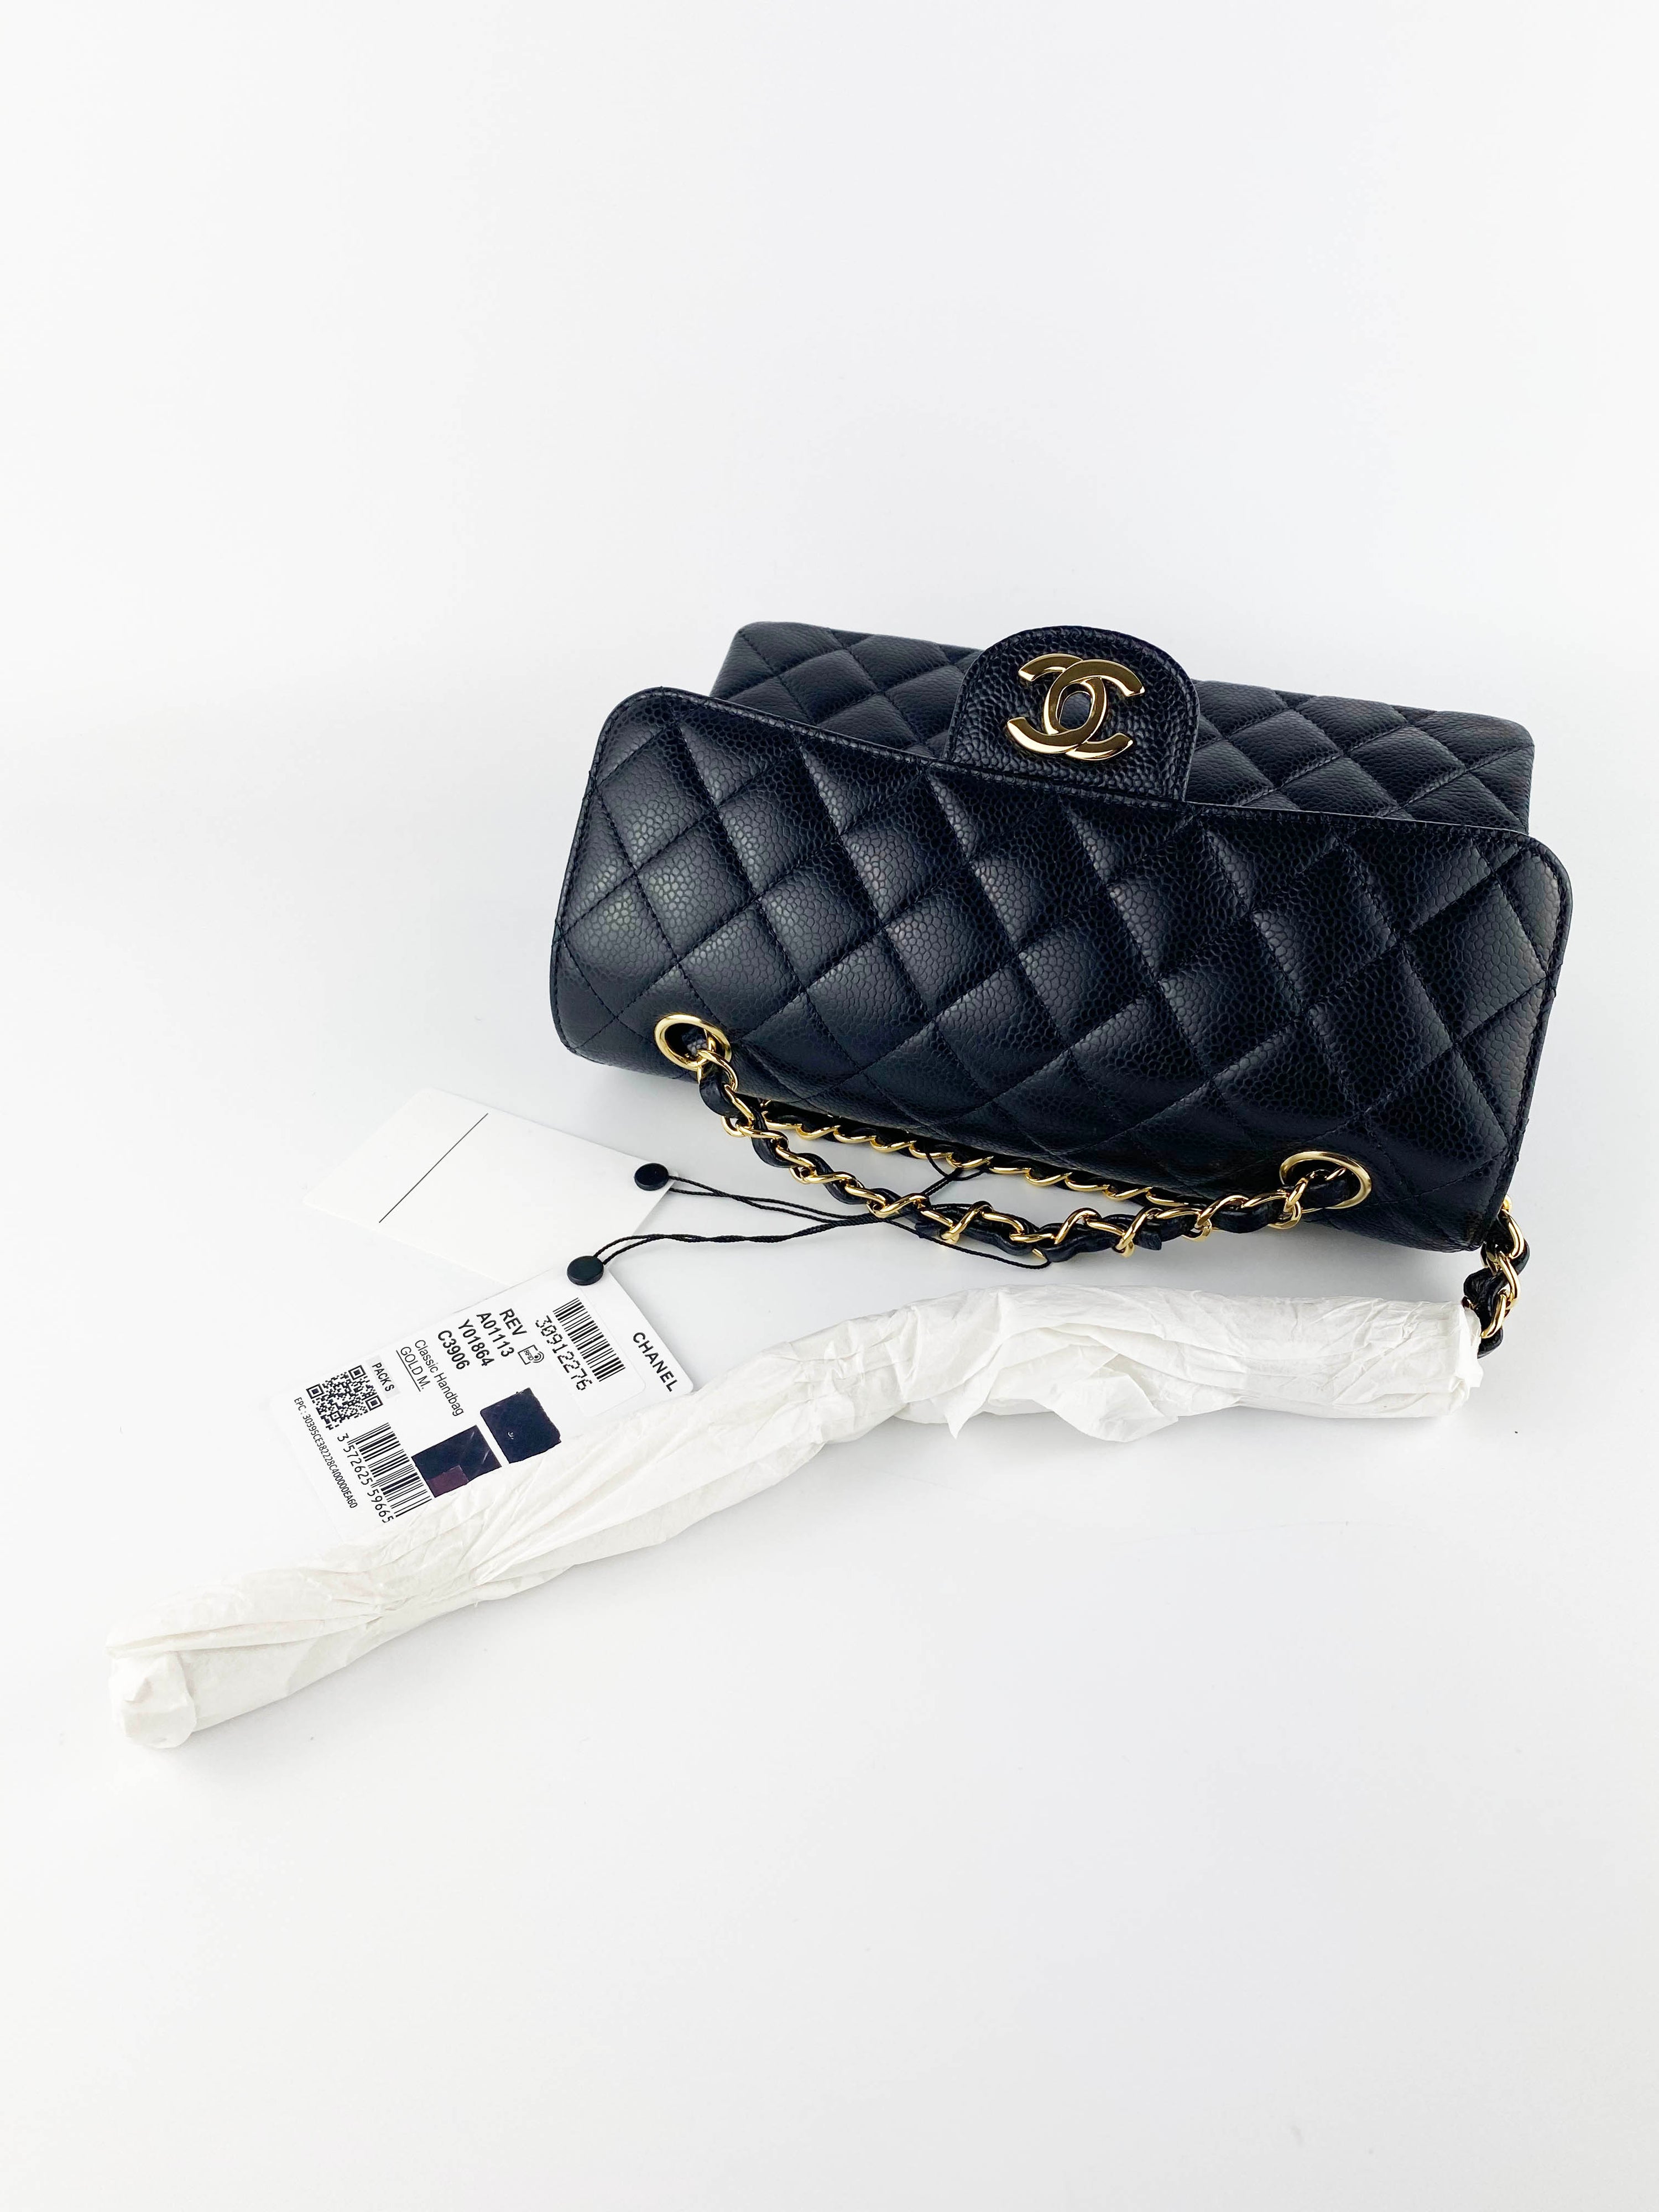 Chanel Black Small Classic Flap Bag